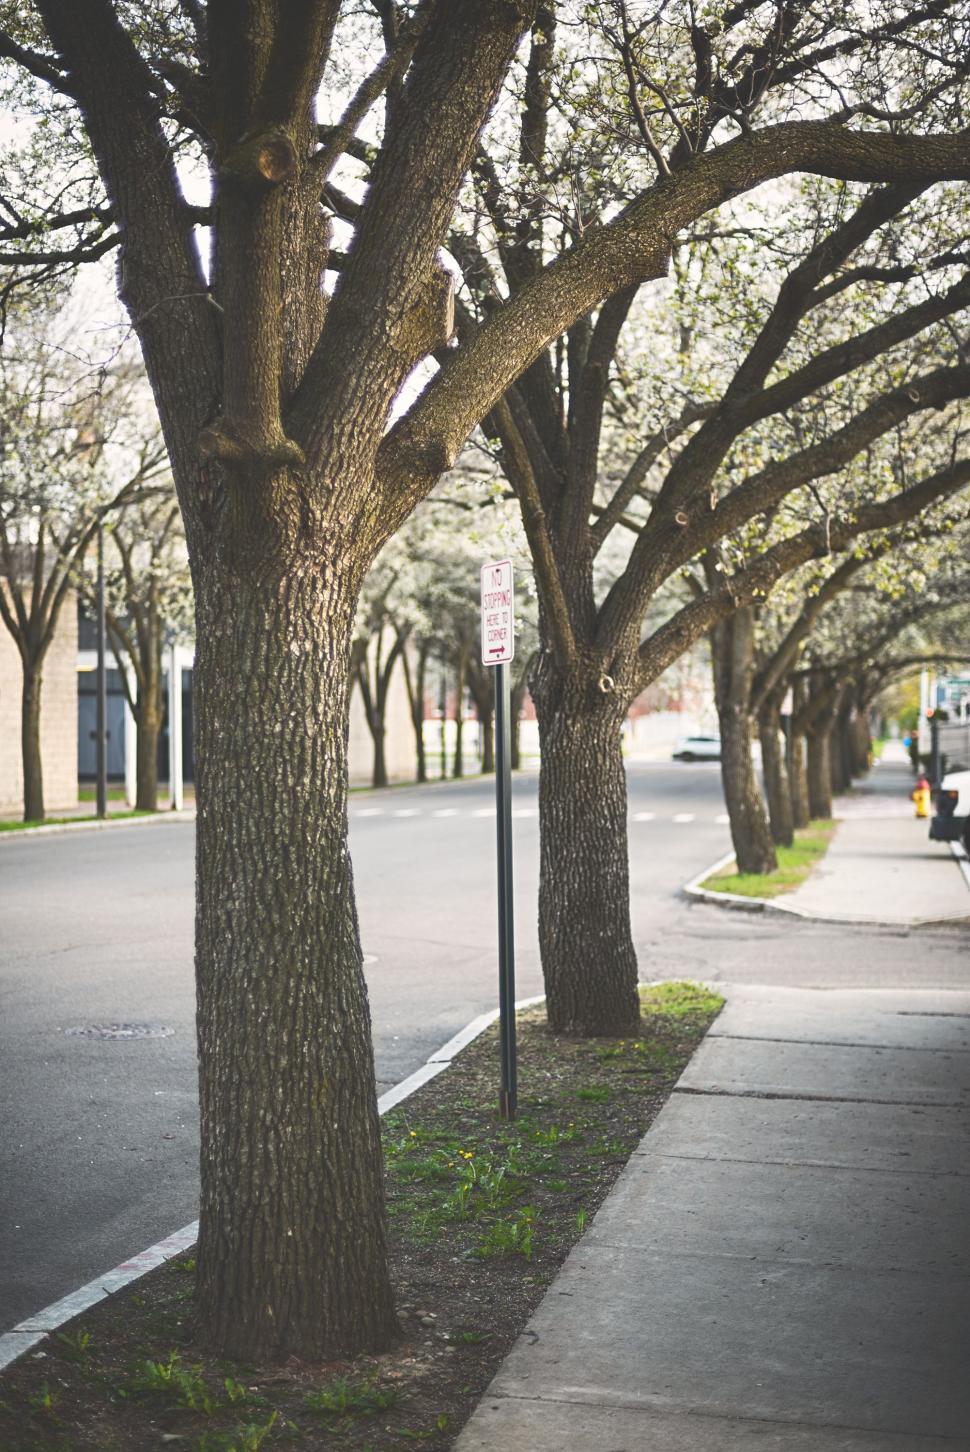 Free Image of Tree-Lined Street Alongside Sidewalk 